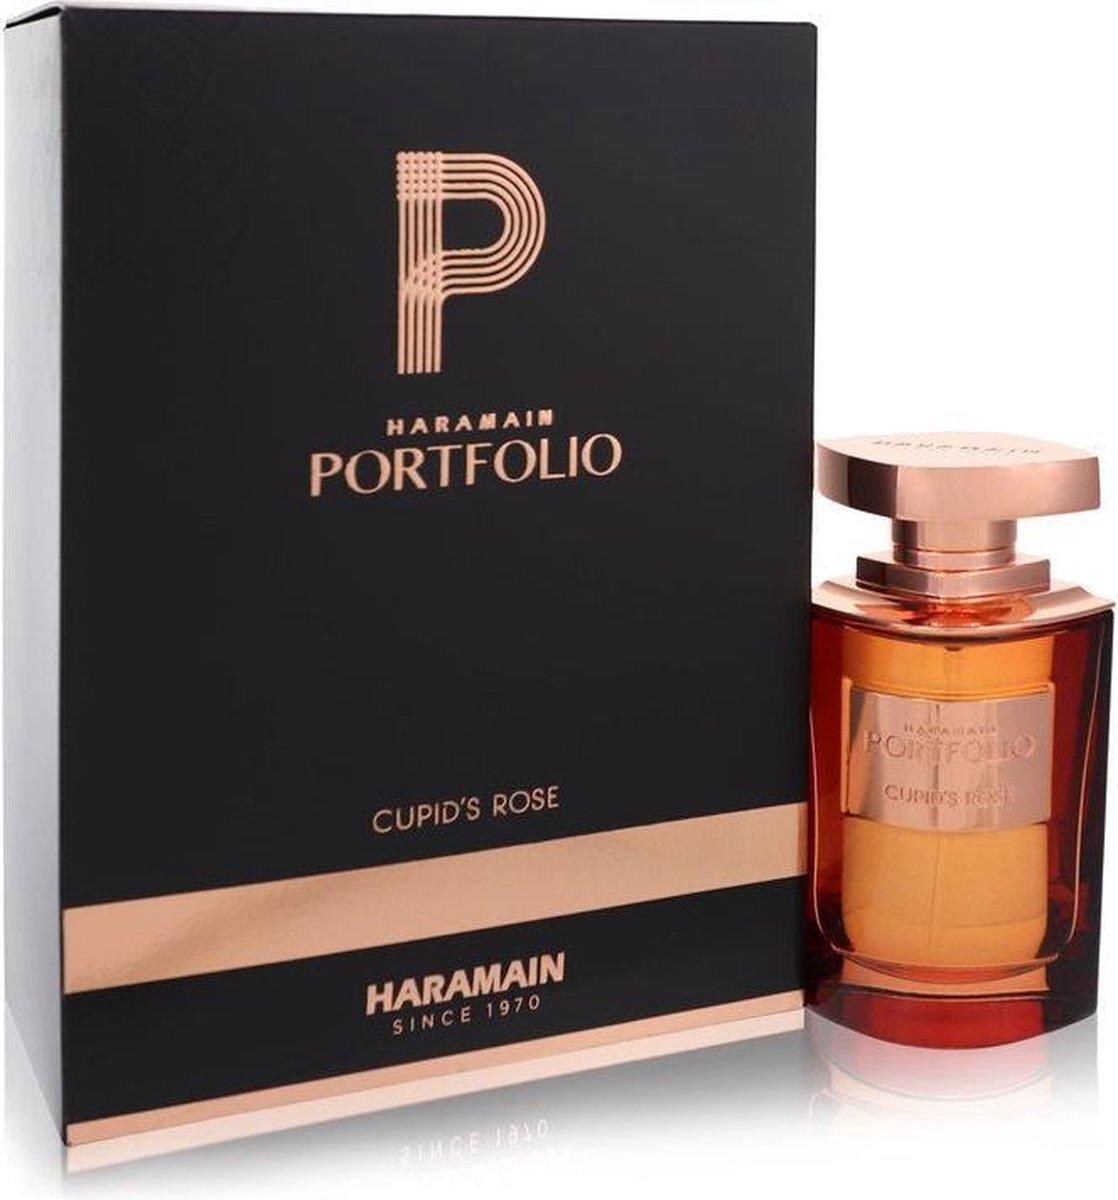 Al Haramain Portfolio eau de parfum / unisex